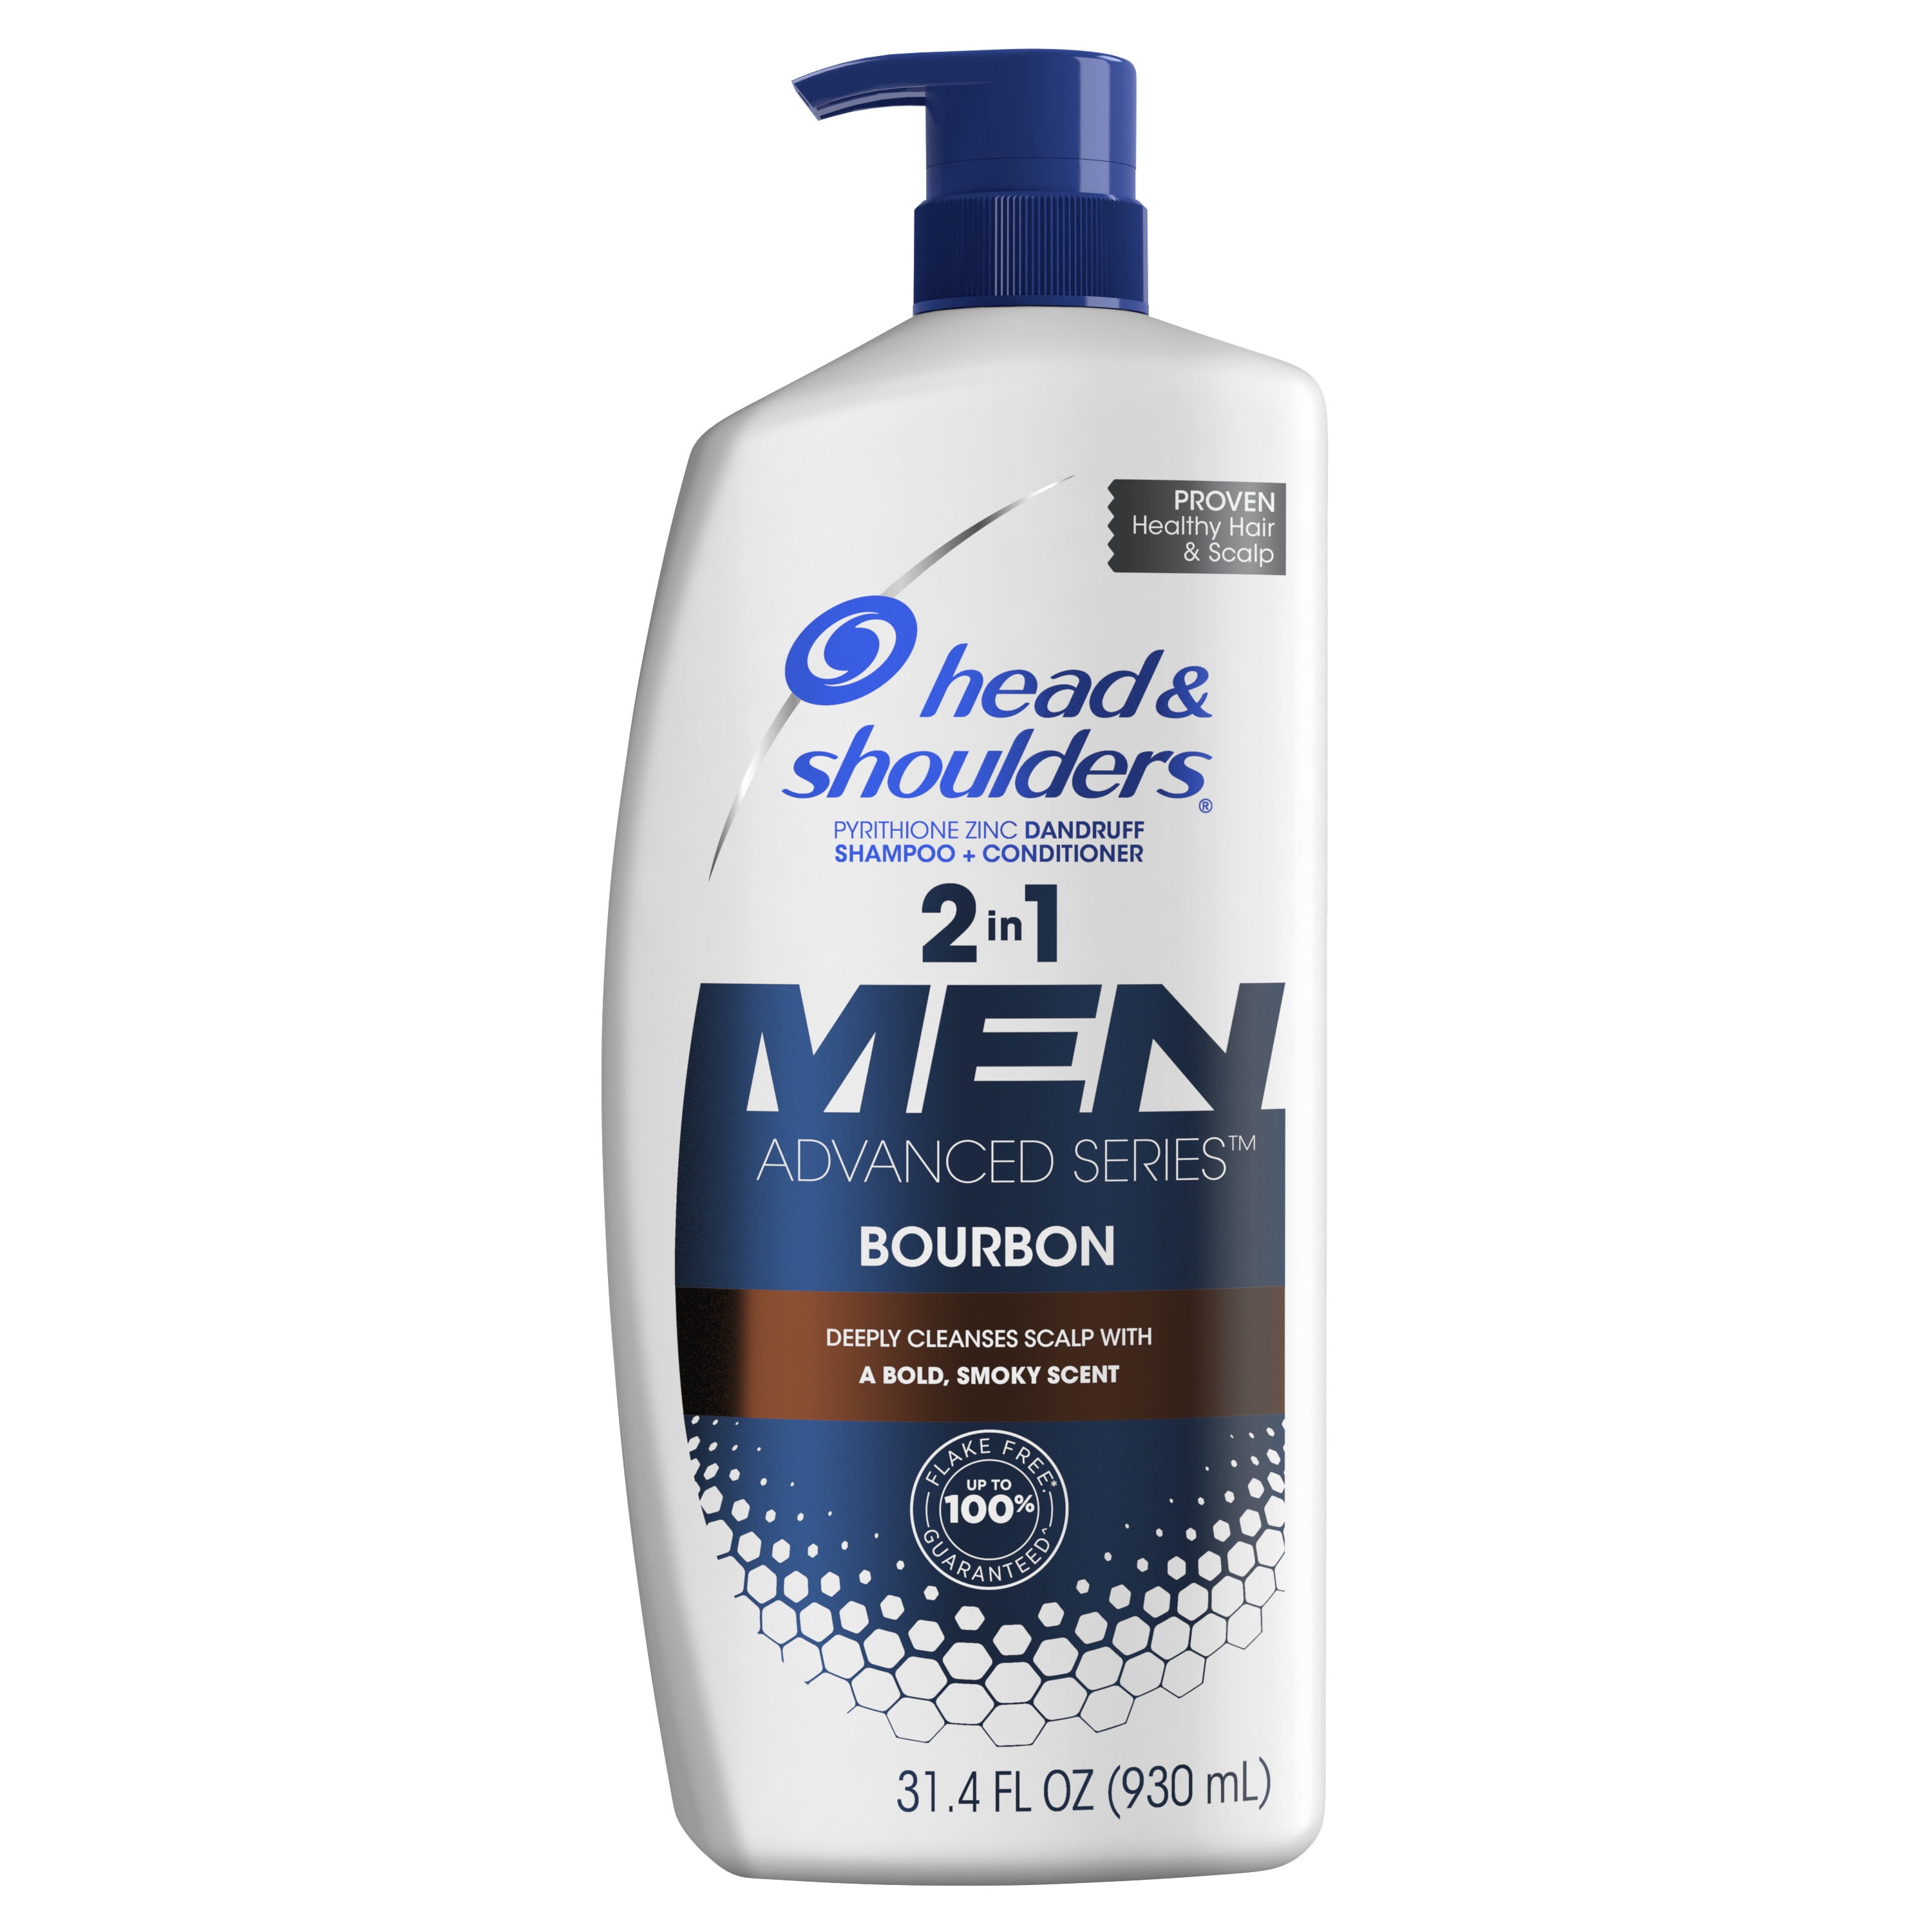 Head & Shoulders Head and Shoulders Advanced Series Bourbon 2-in-1 Anti-Dandruff Shampoo and Conditioner for Men, 31.4 fl oz